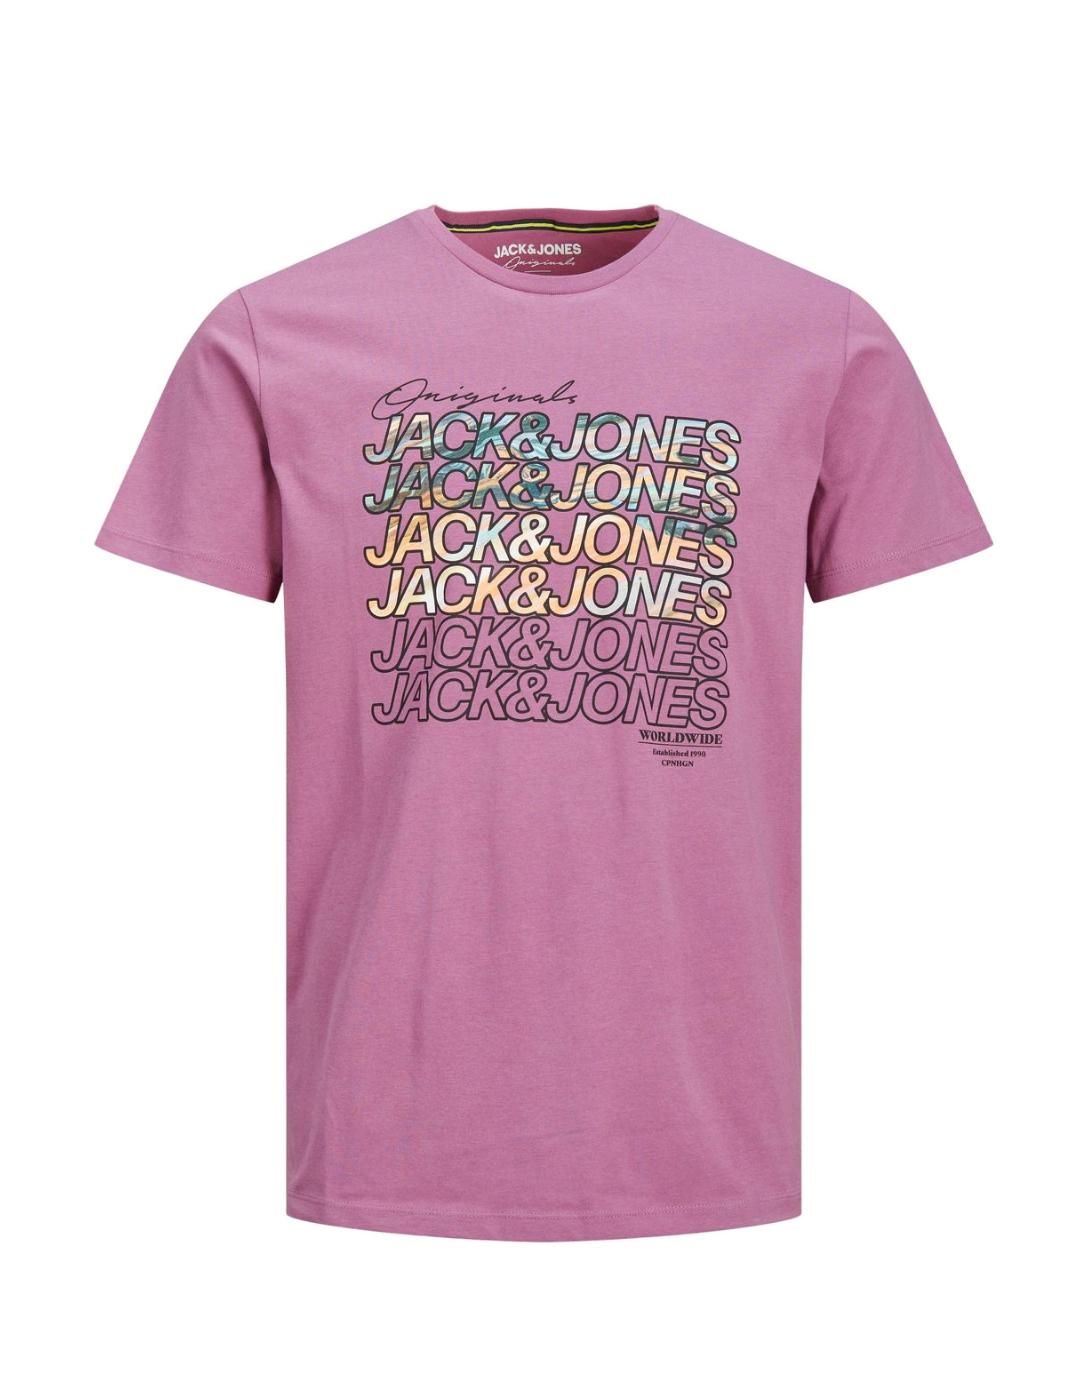 Camiseta Jack-Jones Swirl bordeaux para hombre-z